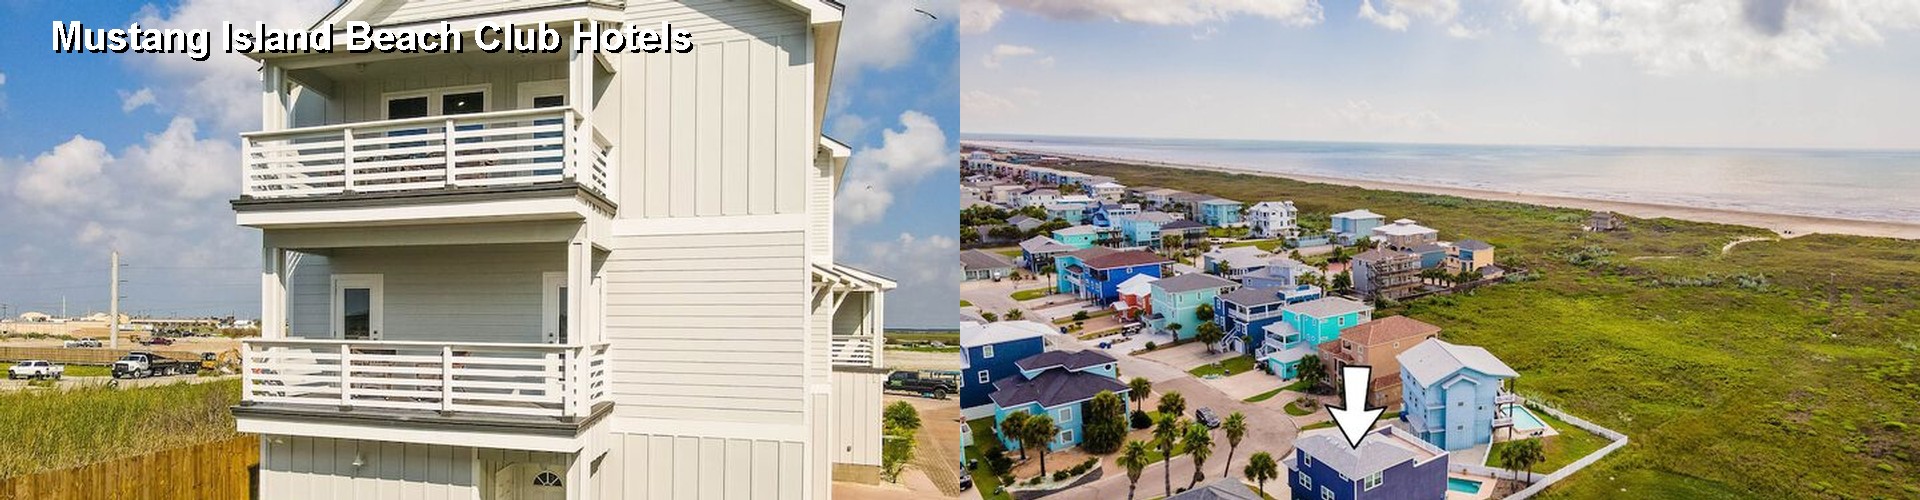 5 Best Hotels near Mustang Island Beach Club